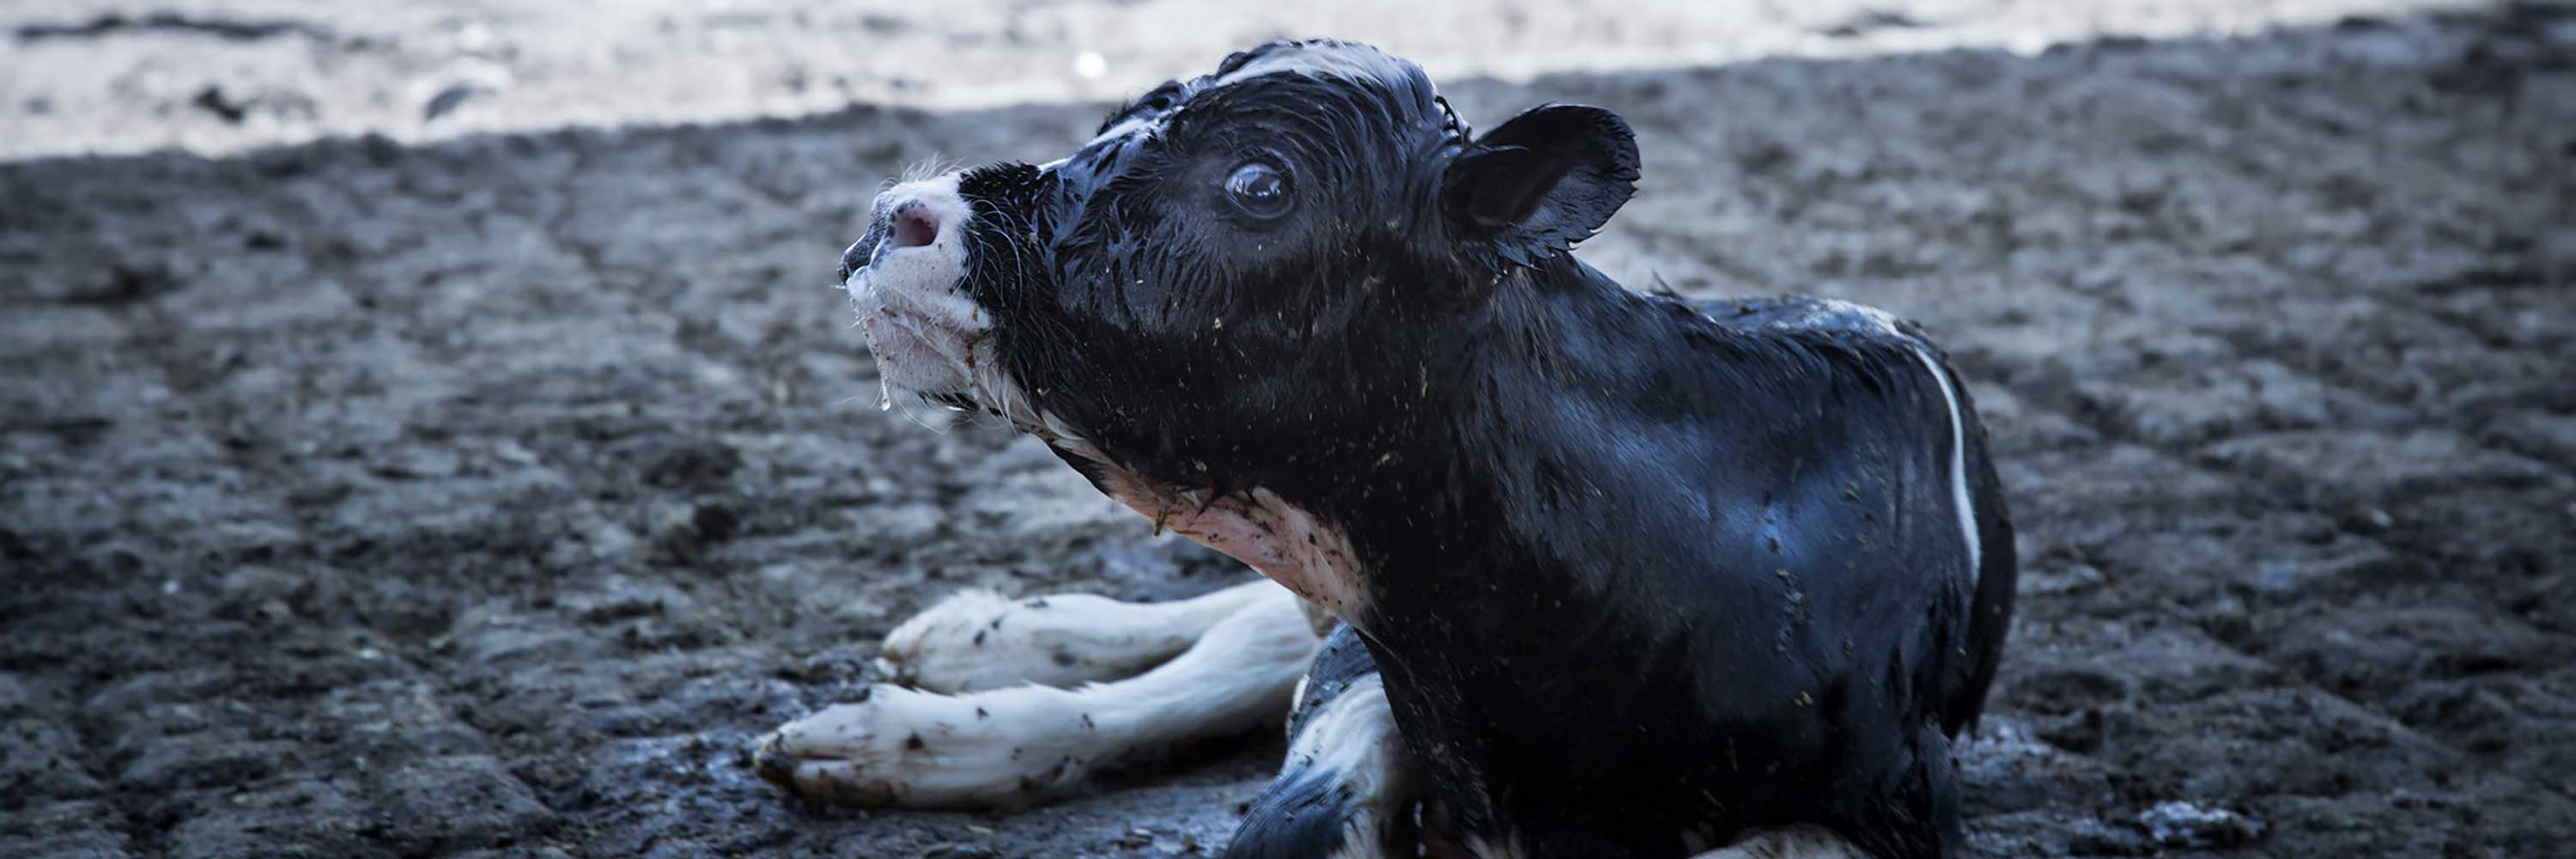 calf on ground just born